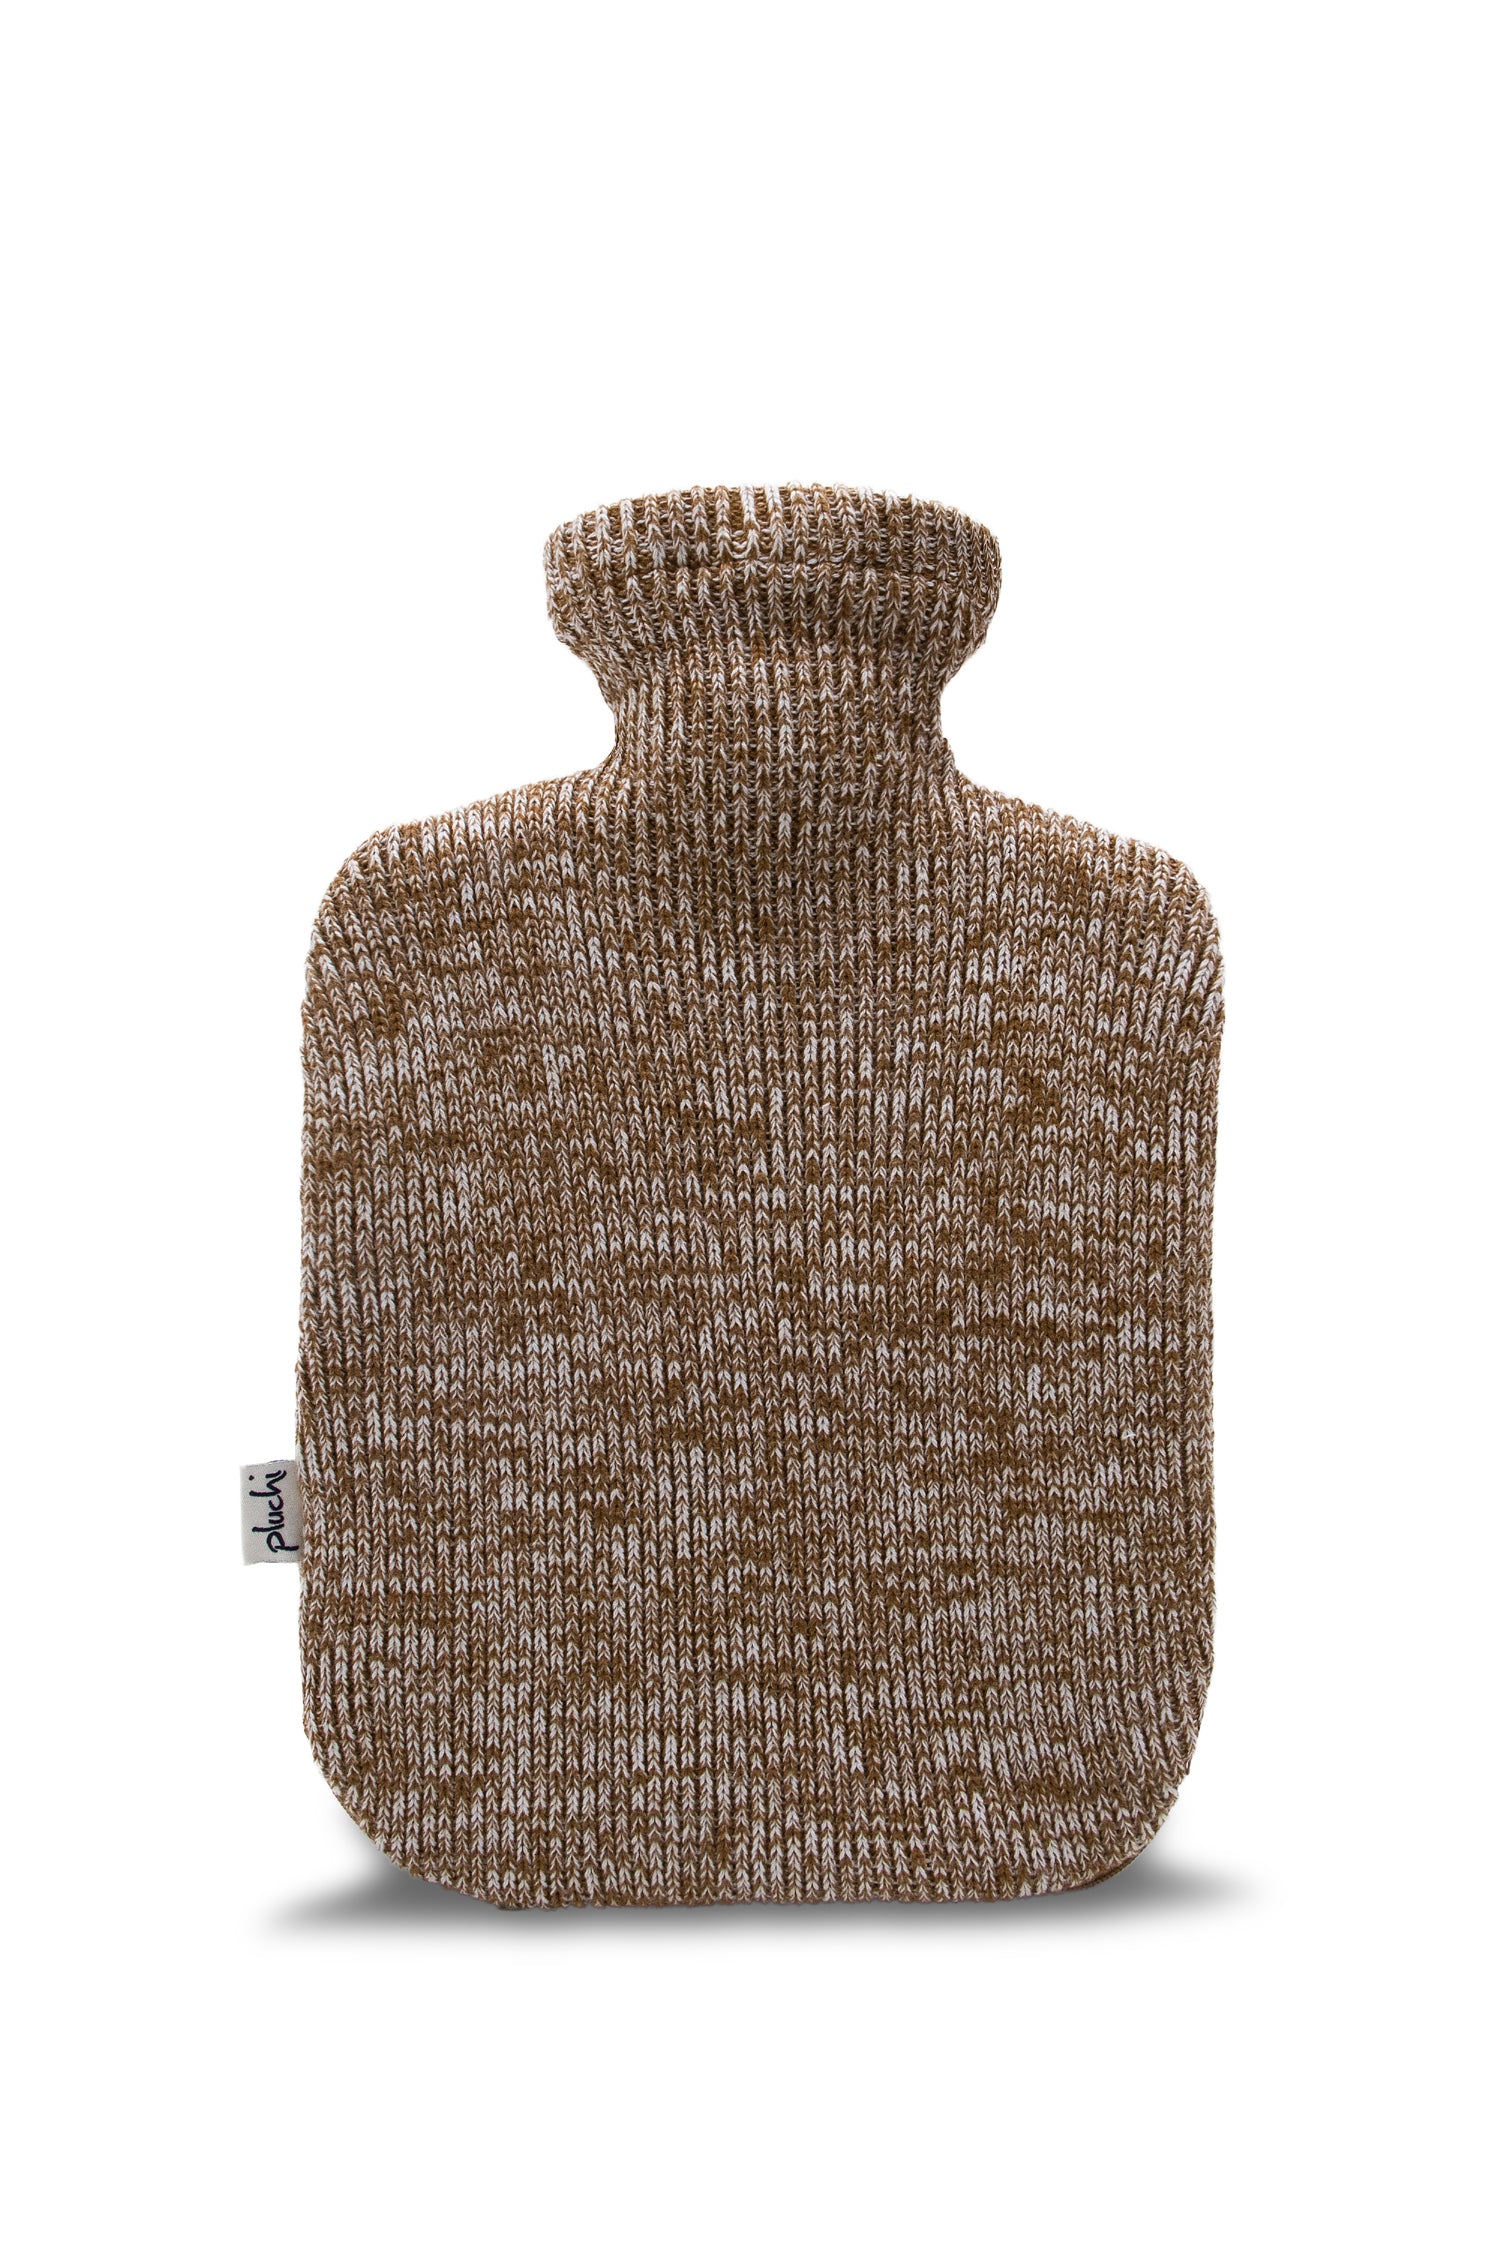 Ece - Dark Grey Melange Knitted Hot Water Bottle Cover